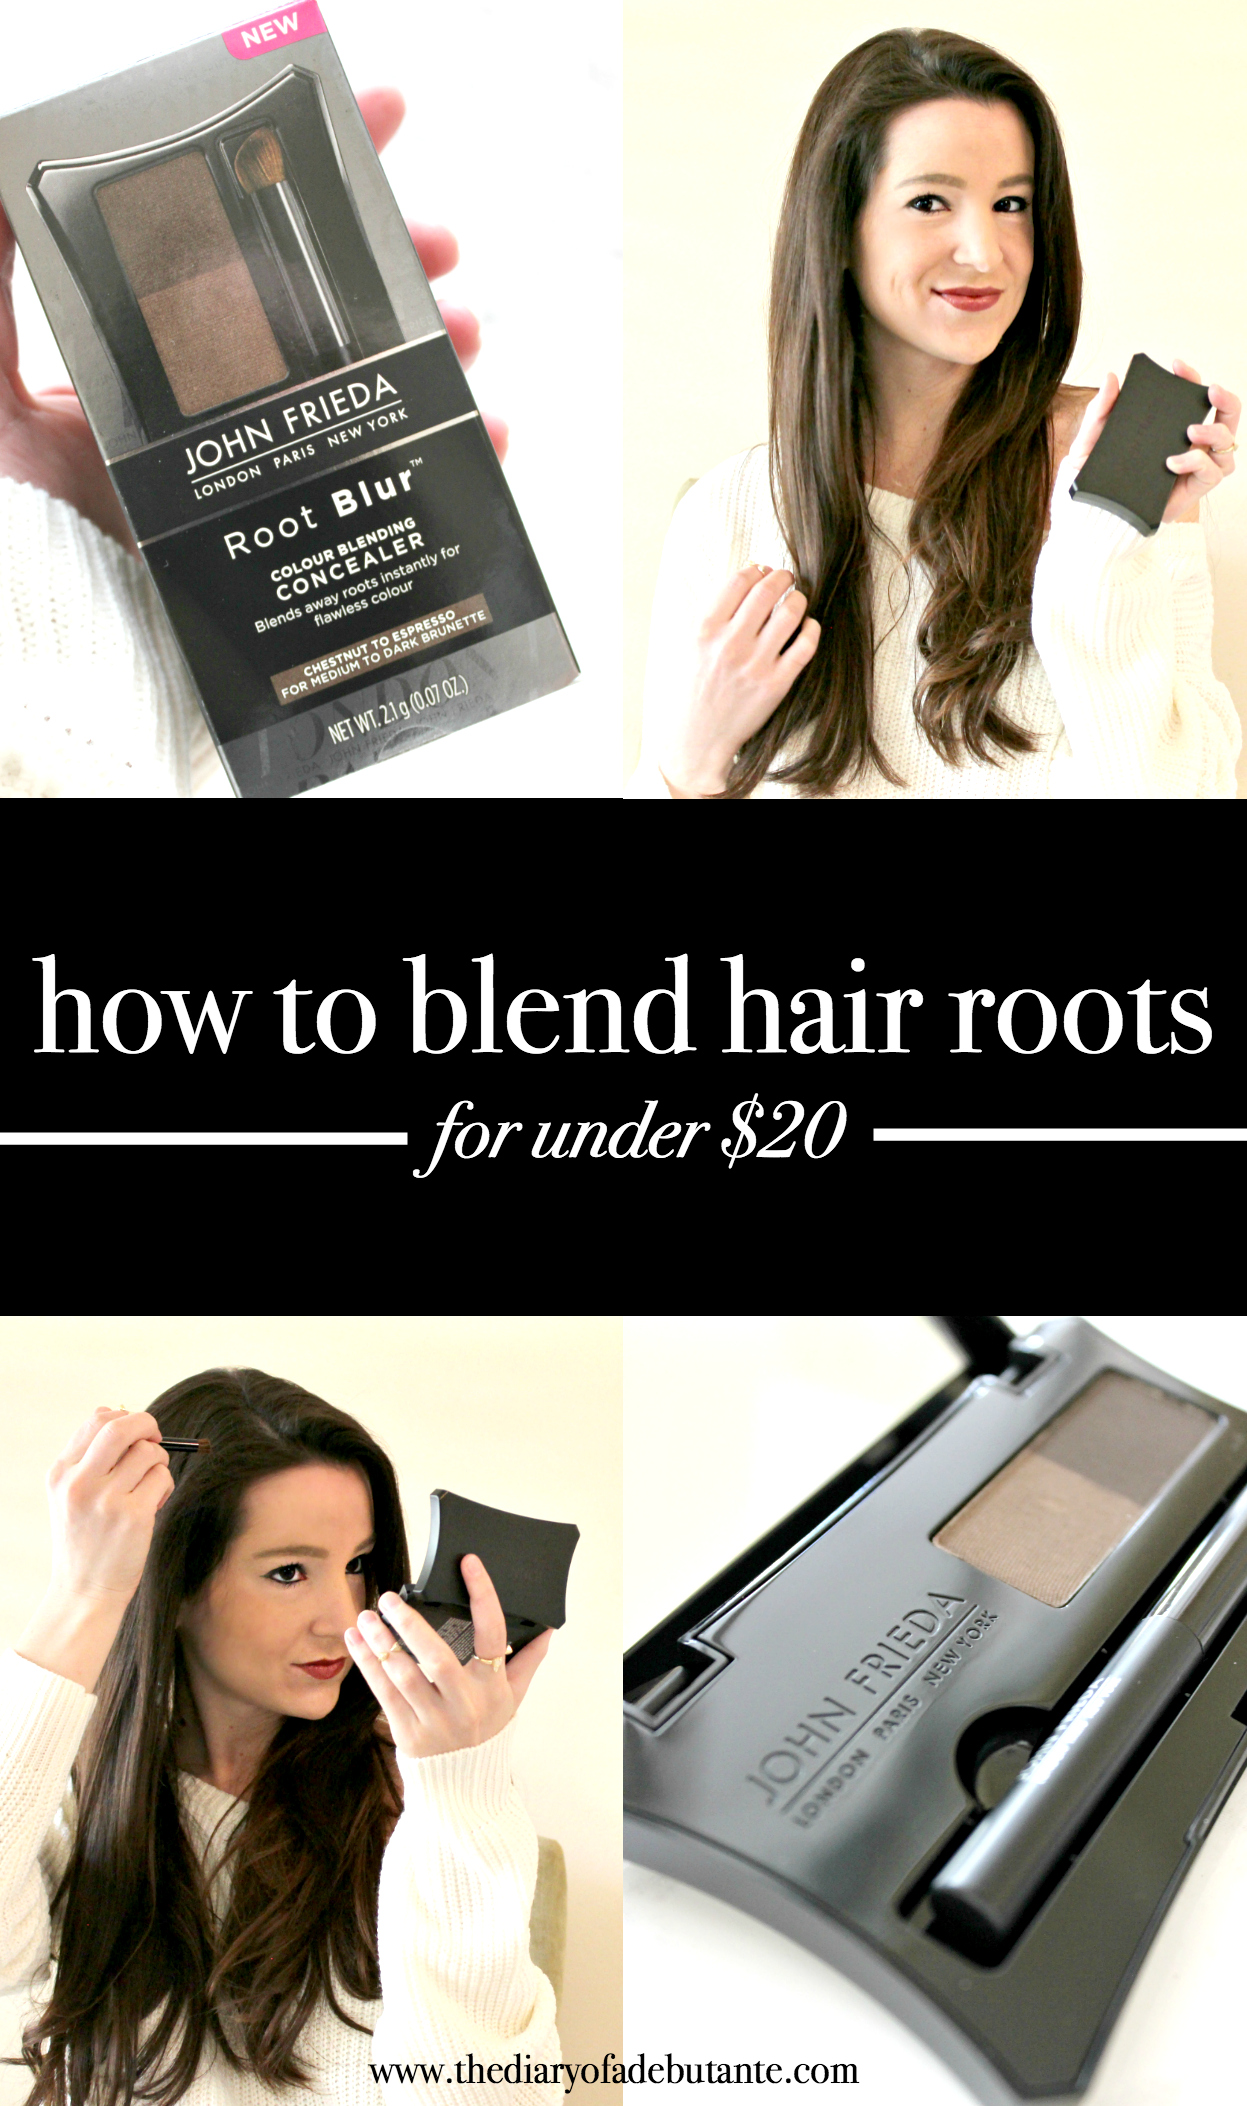 Blend Hair Roots, Affordable Way to Blend Hair Roots, John Frieda, John Frieda Root Blur, Stephanie Ziajka, Diary of a Debutante